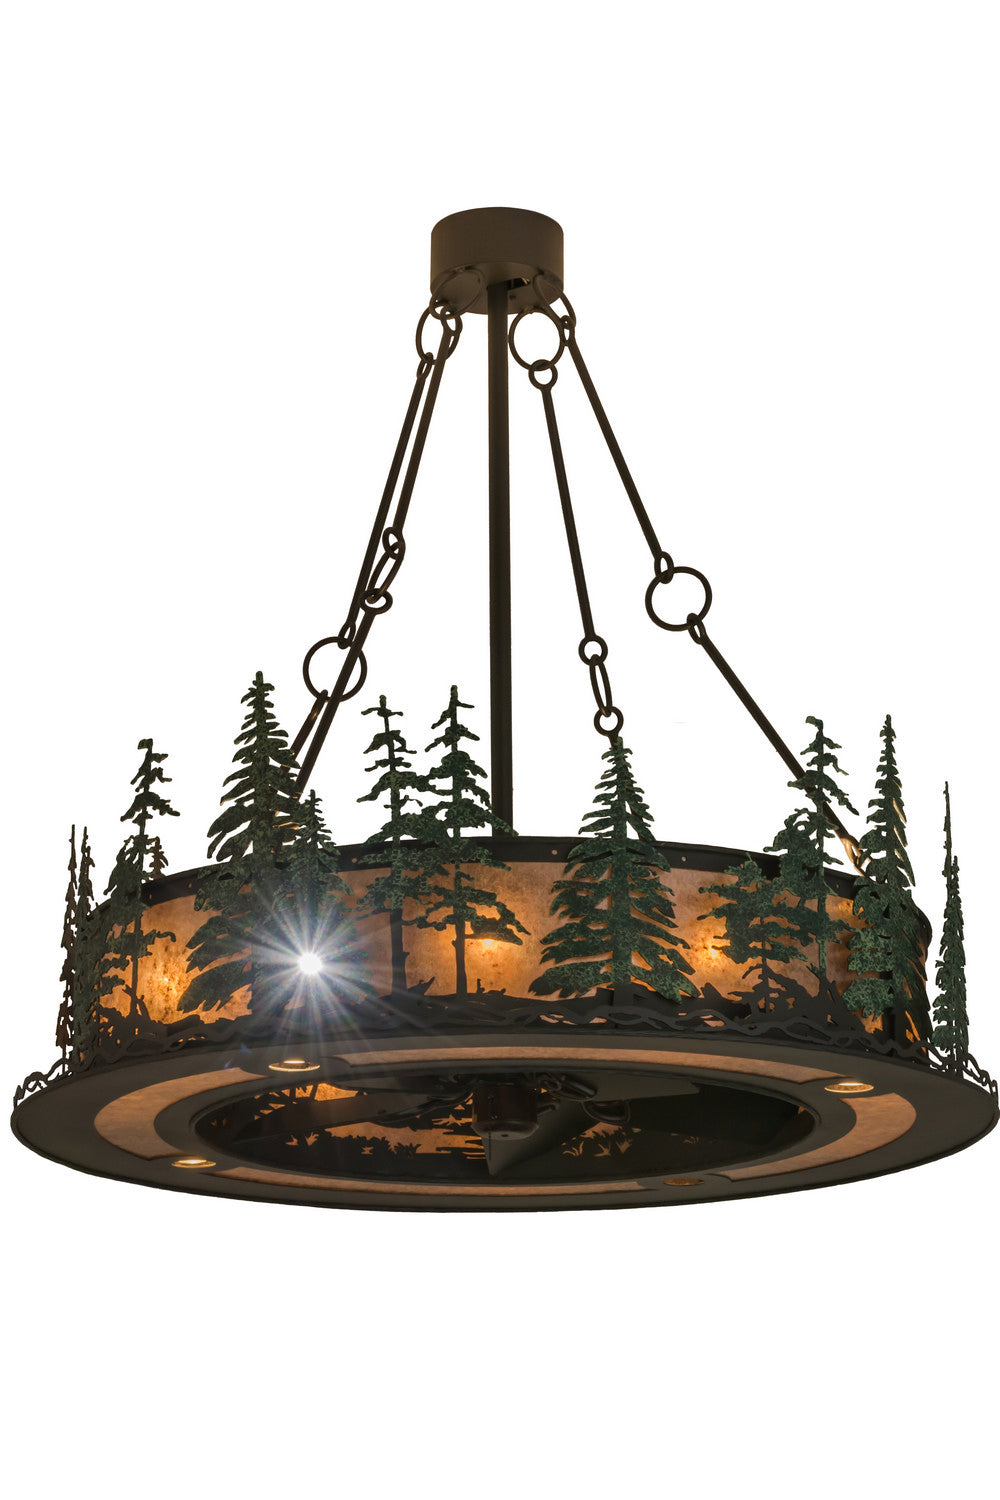 Meyda Tiffany Tall Pines 162413 Ceiling Fan - Wrought Iron